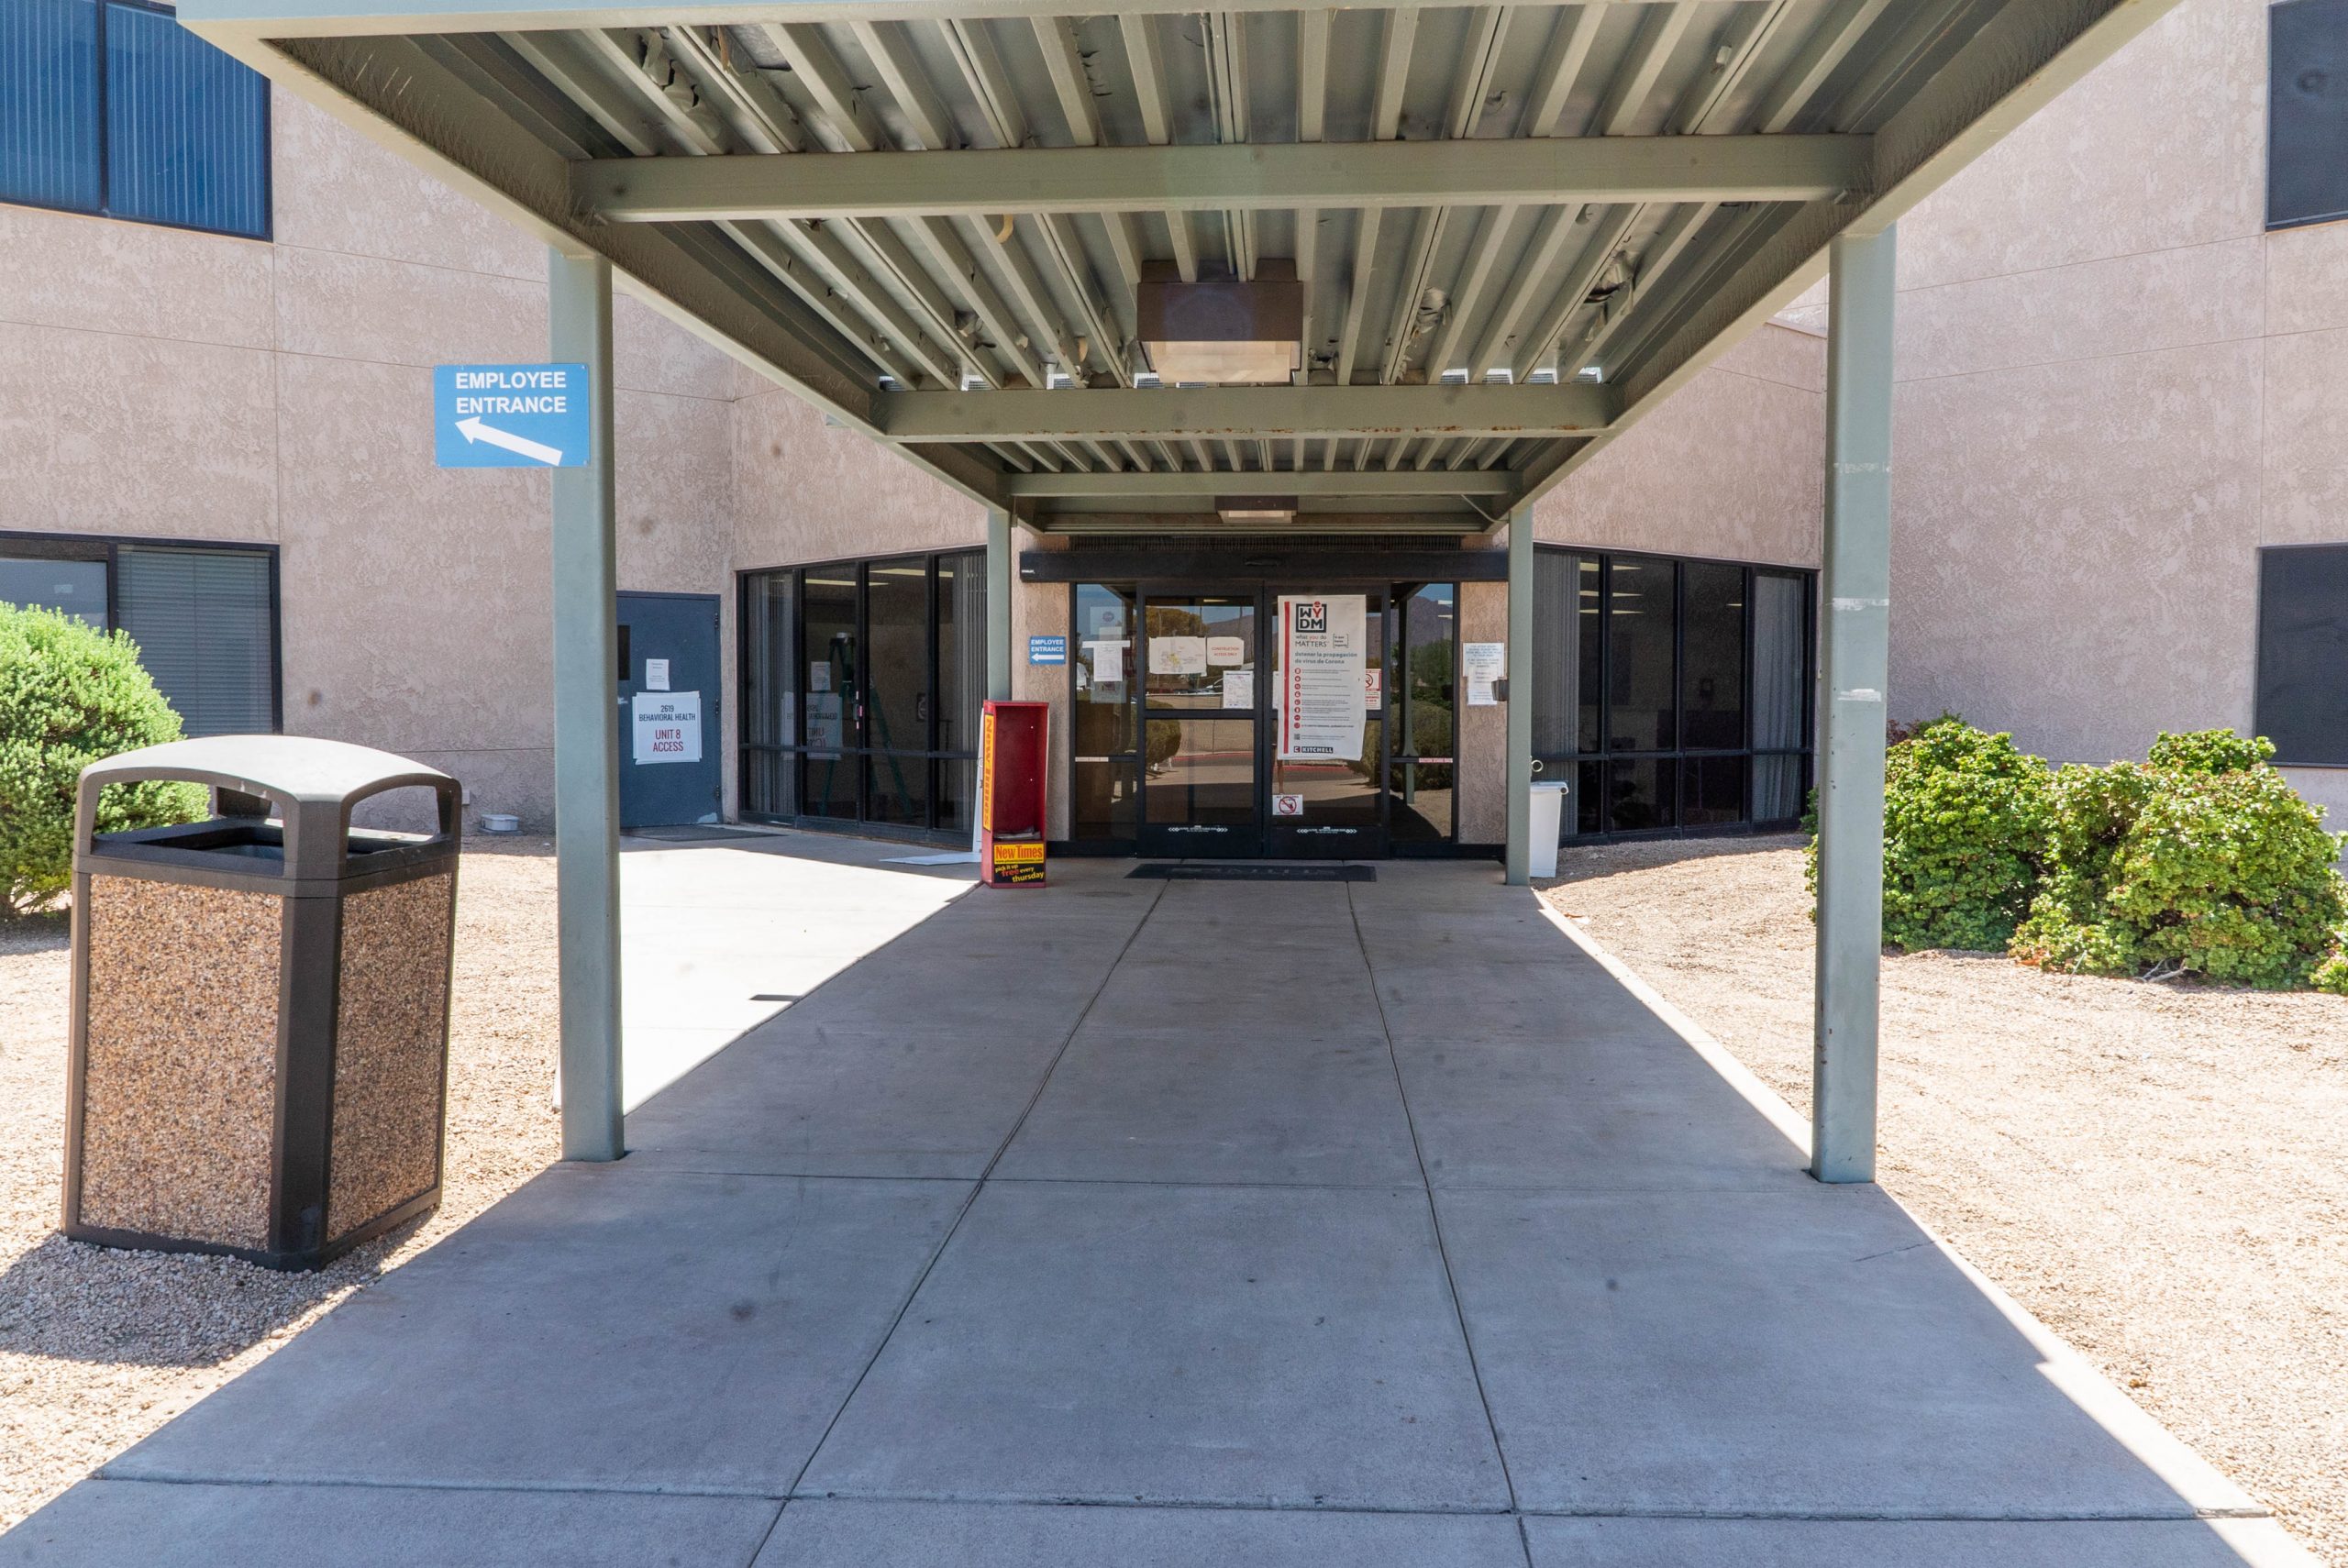 Valleywise Health Community Center entrance door